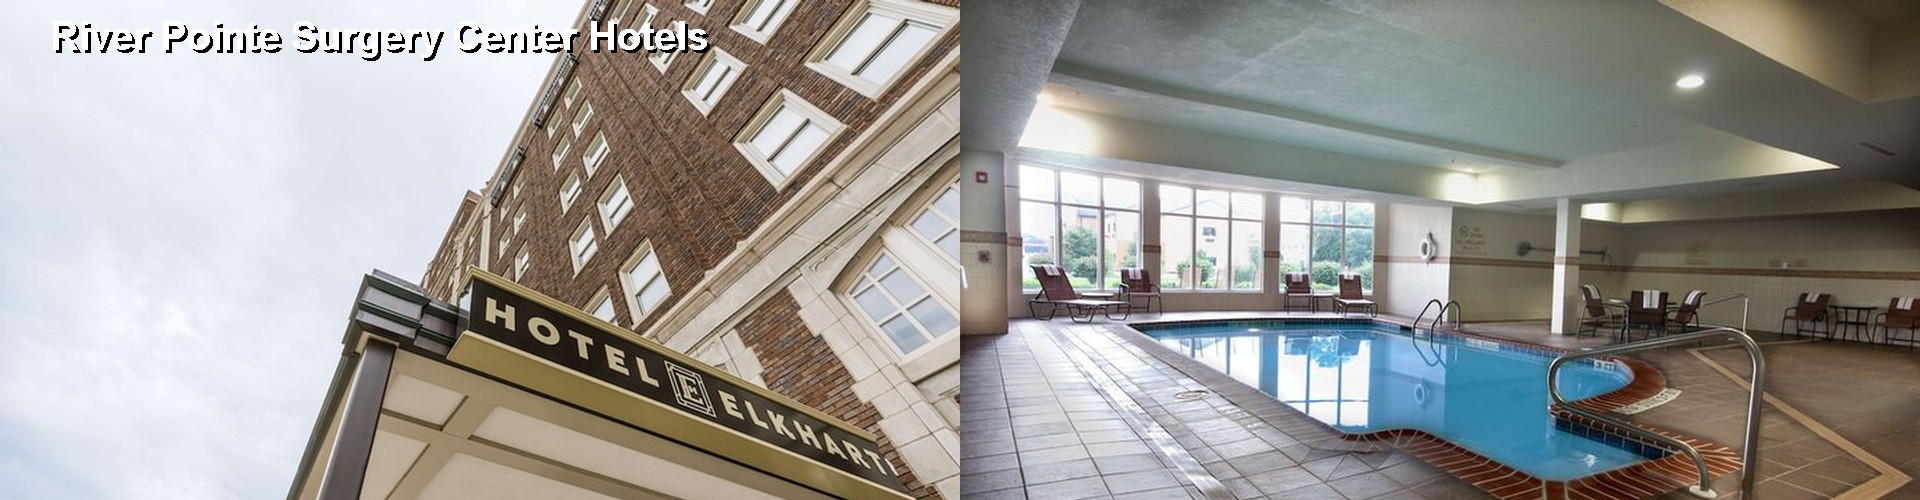 3 Best Hotels near River Pointe Surgery Center